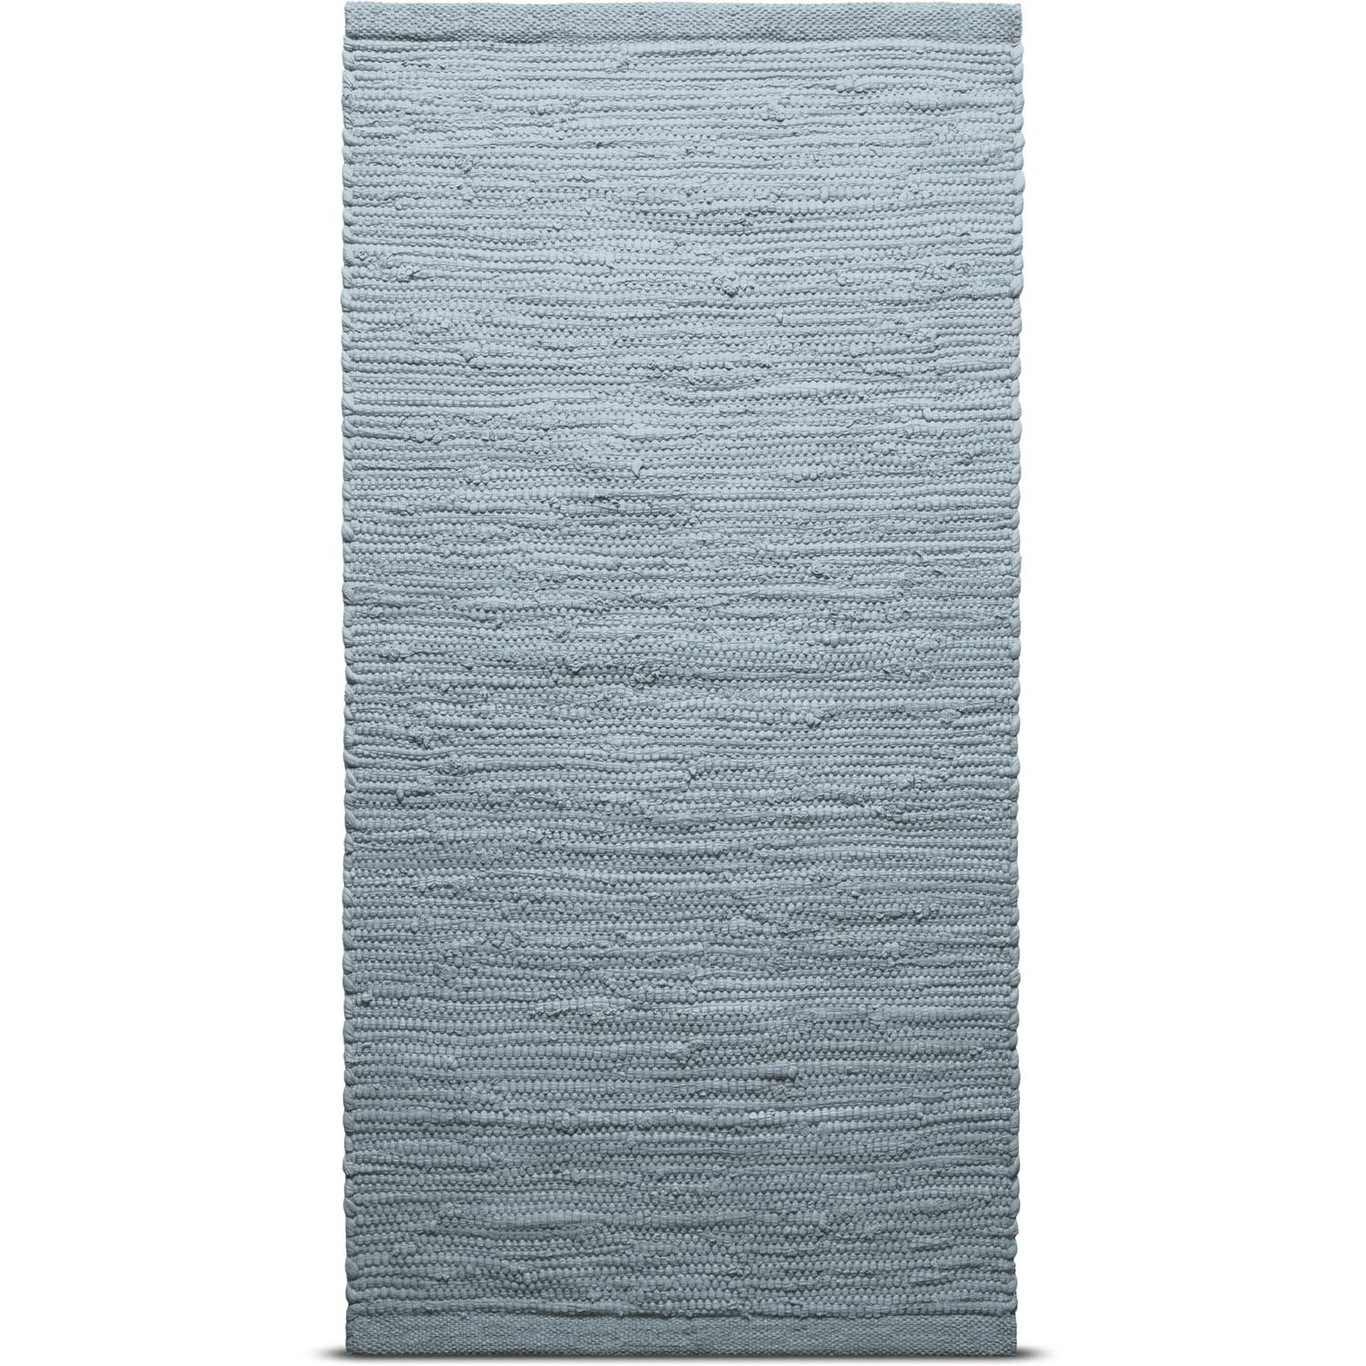 Cotton Vloerkleed Lichtgrijs, 75x200 cm